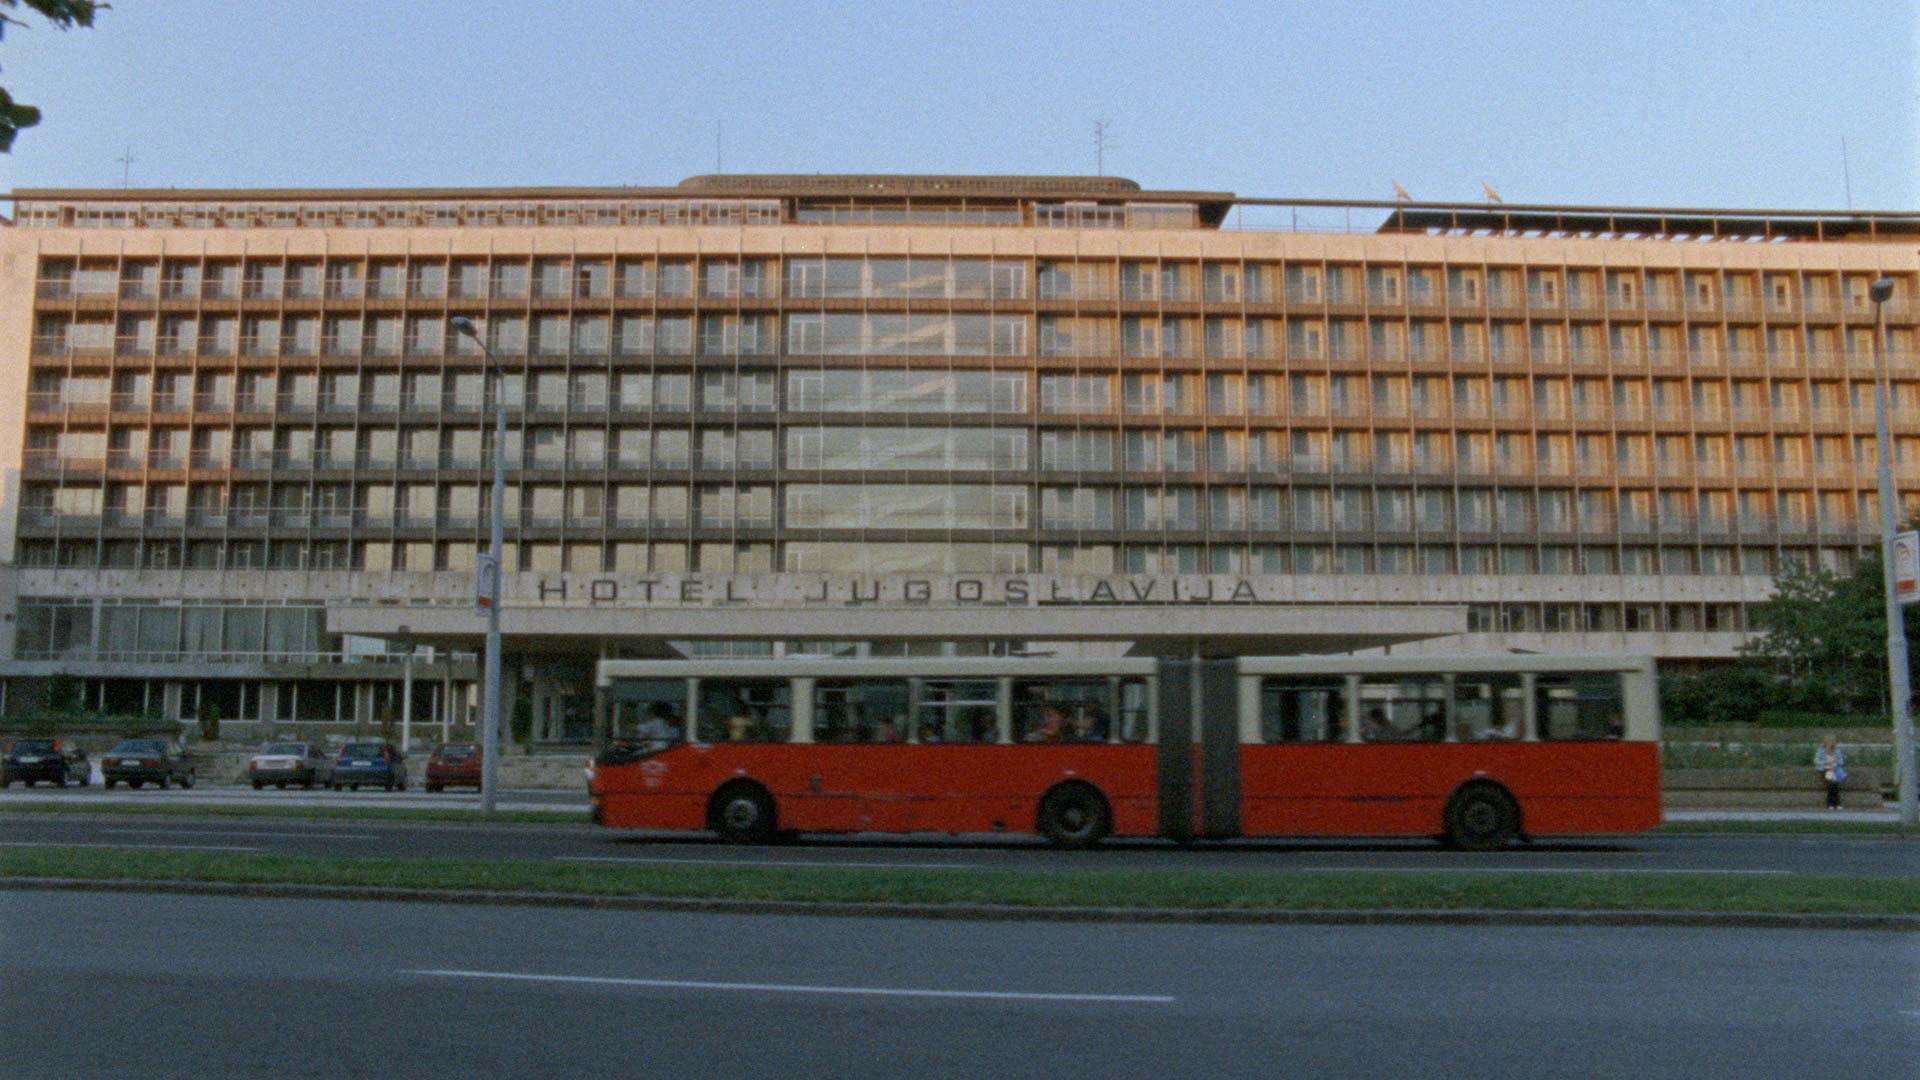 Hotel Jugoslavija 2 - © C-Side Productions